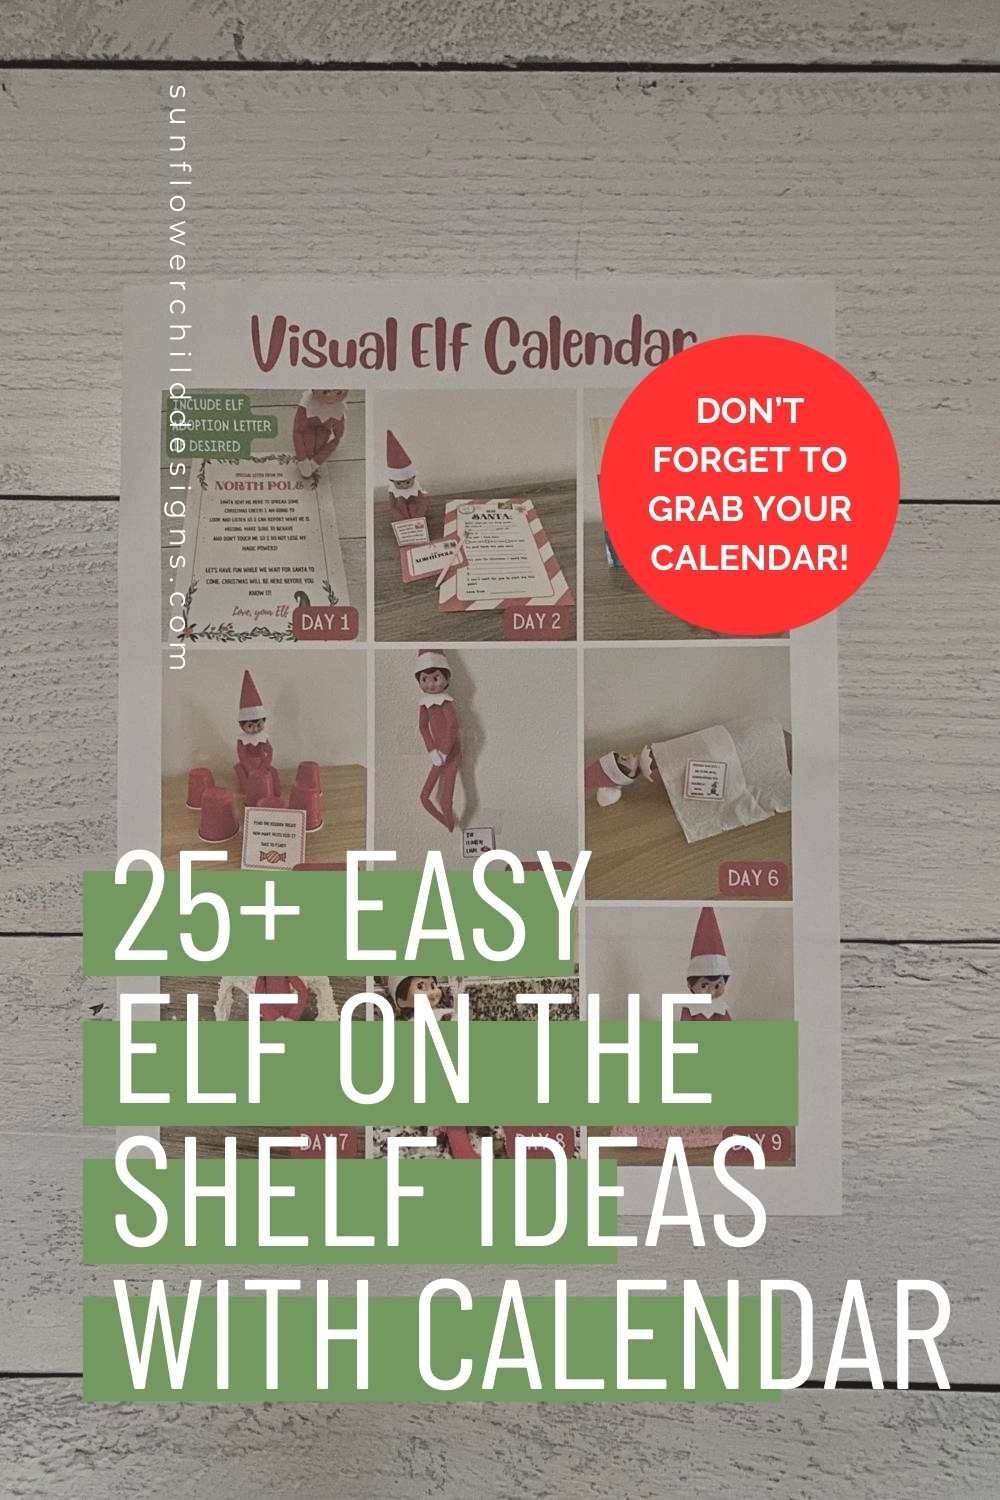 Unleash Holiday Magic: 25+ Simple Elf on the Shelf Ideas & Printable ...